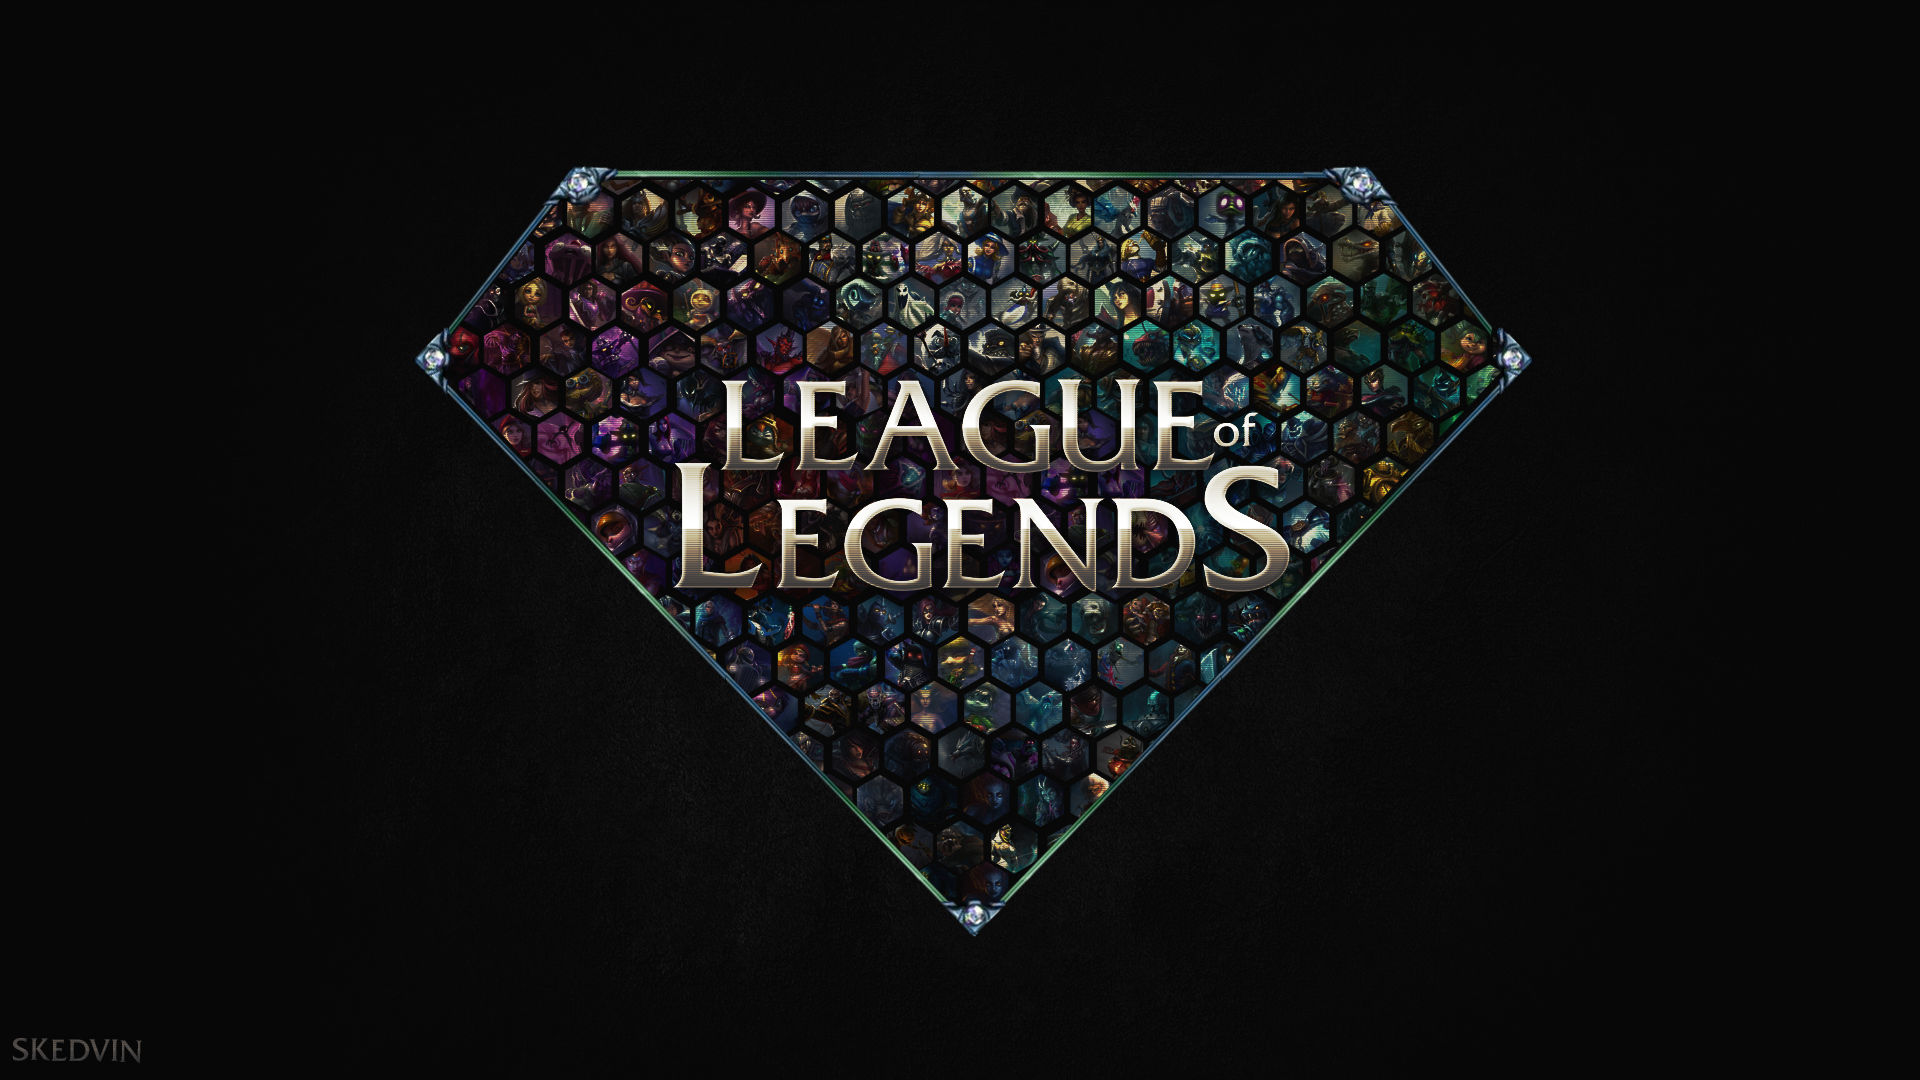 League of Legends wallpaper [1920*1080p] HD by SKEDVIN on DeviantArt